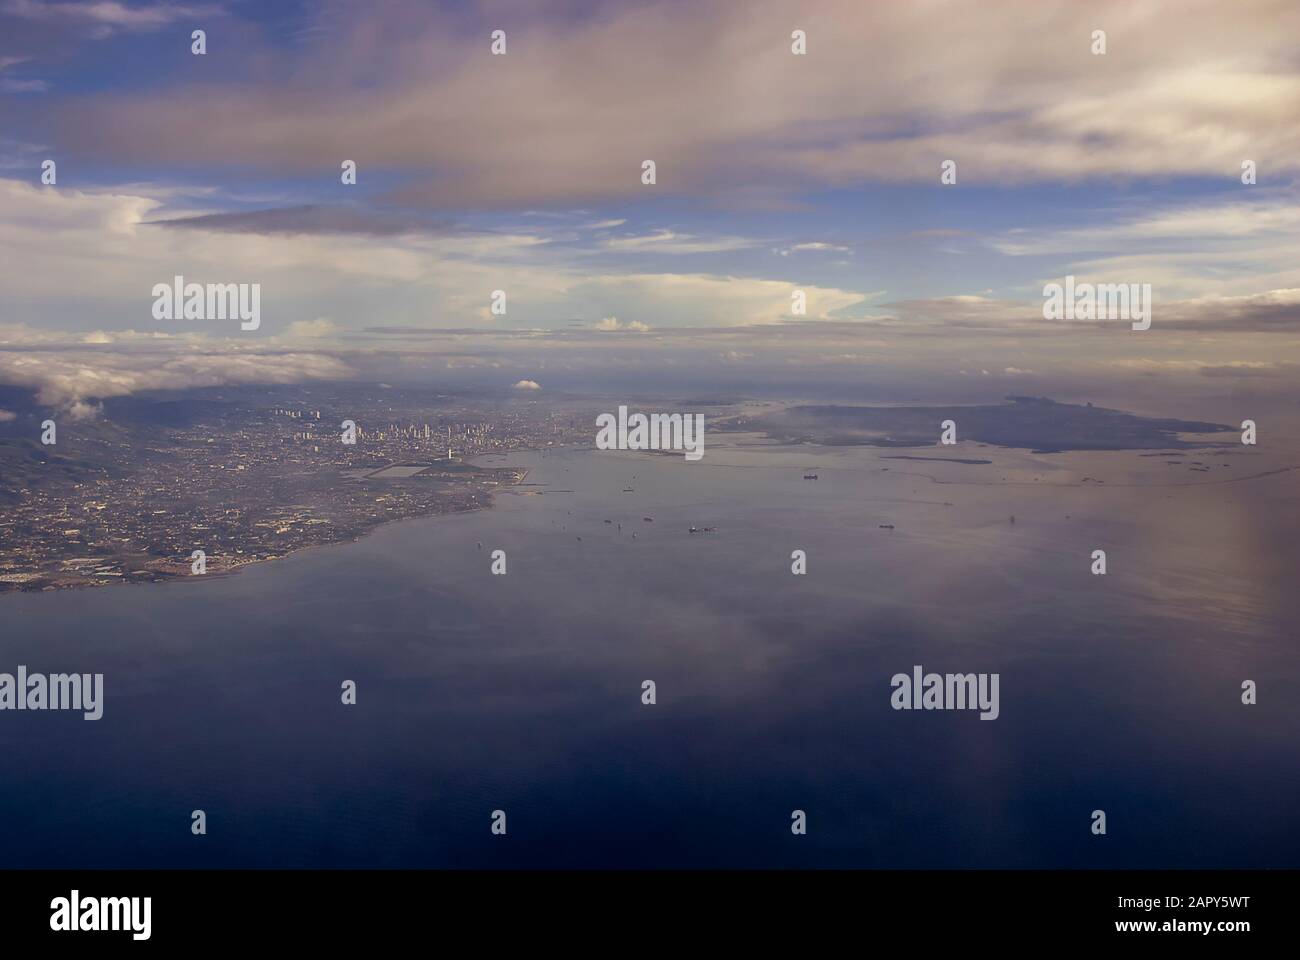 The coastline of Cebu in the Philippines Stock Photo